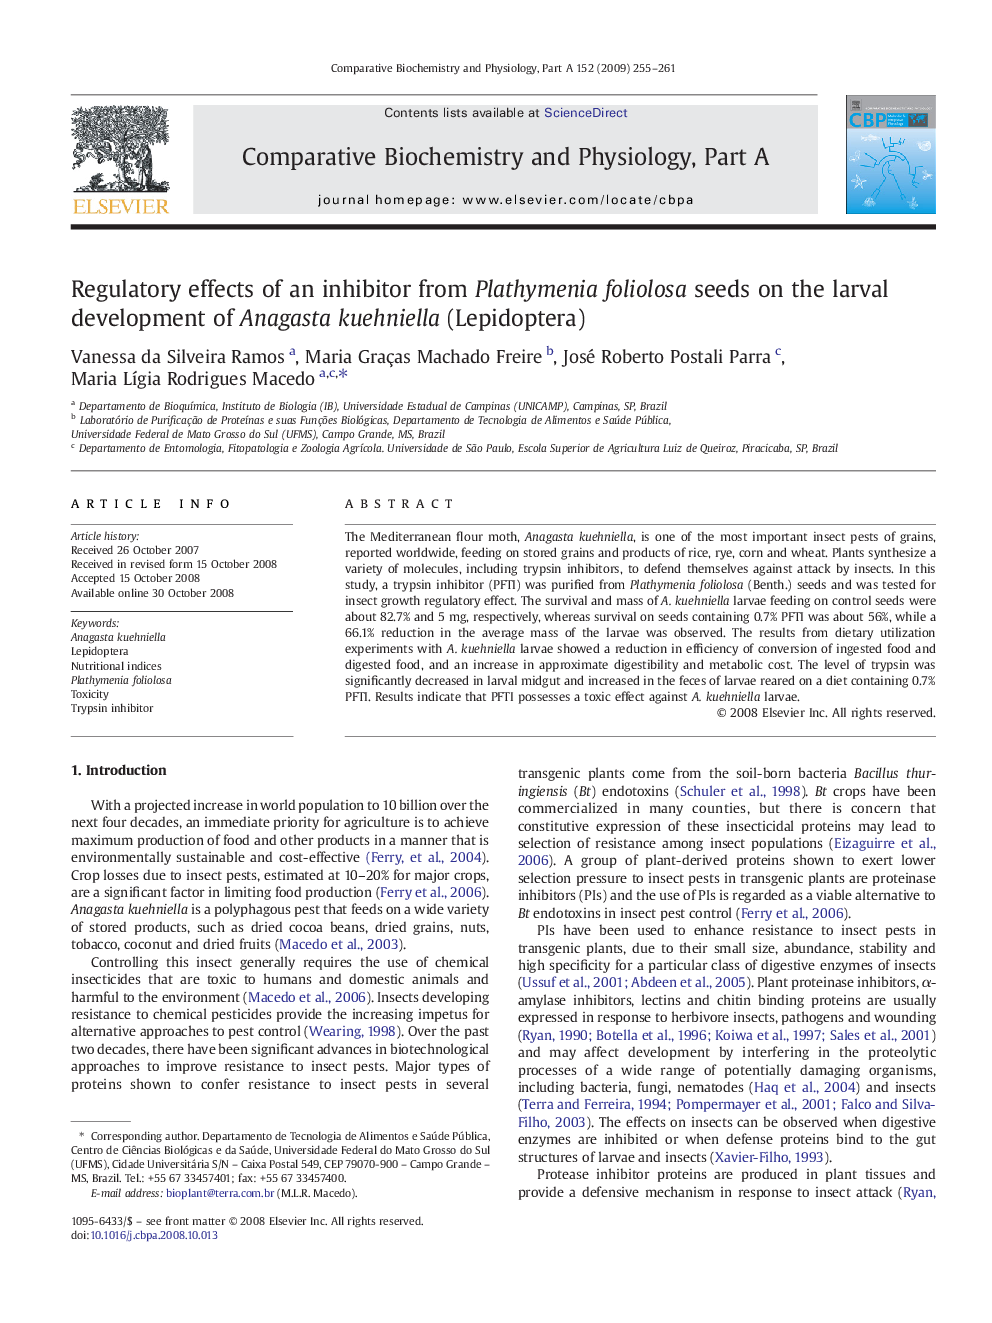 Regulatory effects of an inhibitor from Plathymenia foliolosa seeds on the larval development of Anagasta kuehniella (Lepidoptera)